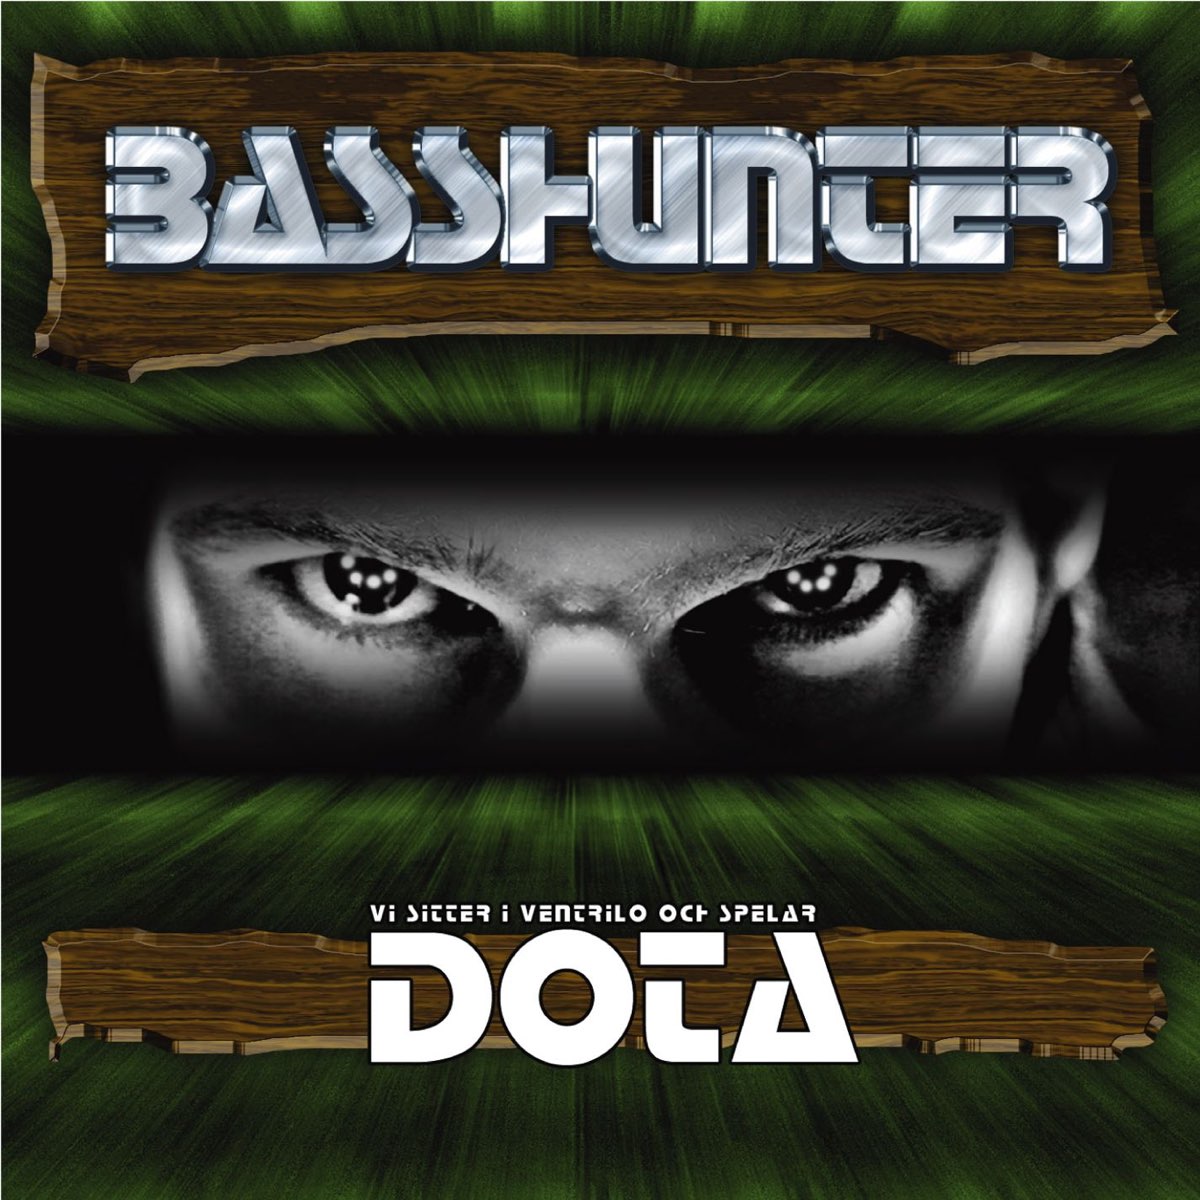 Basshunter and dota фото 14